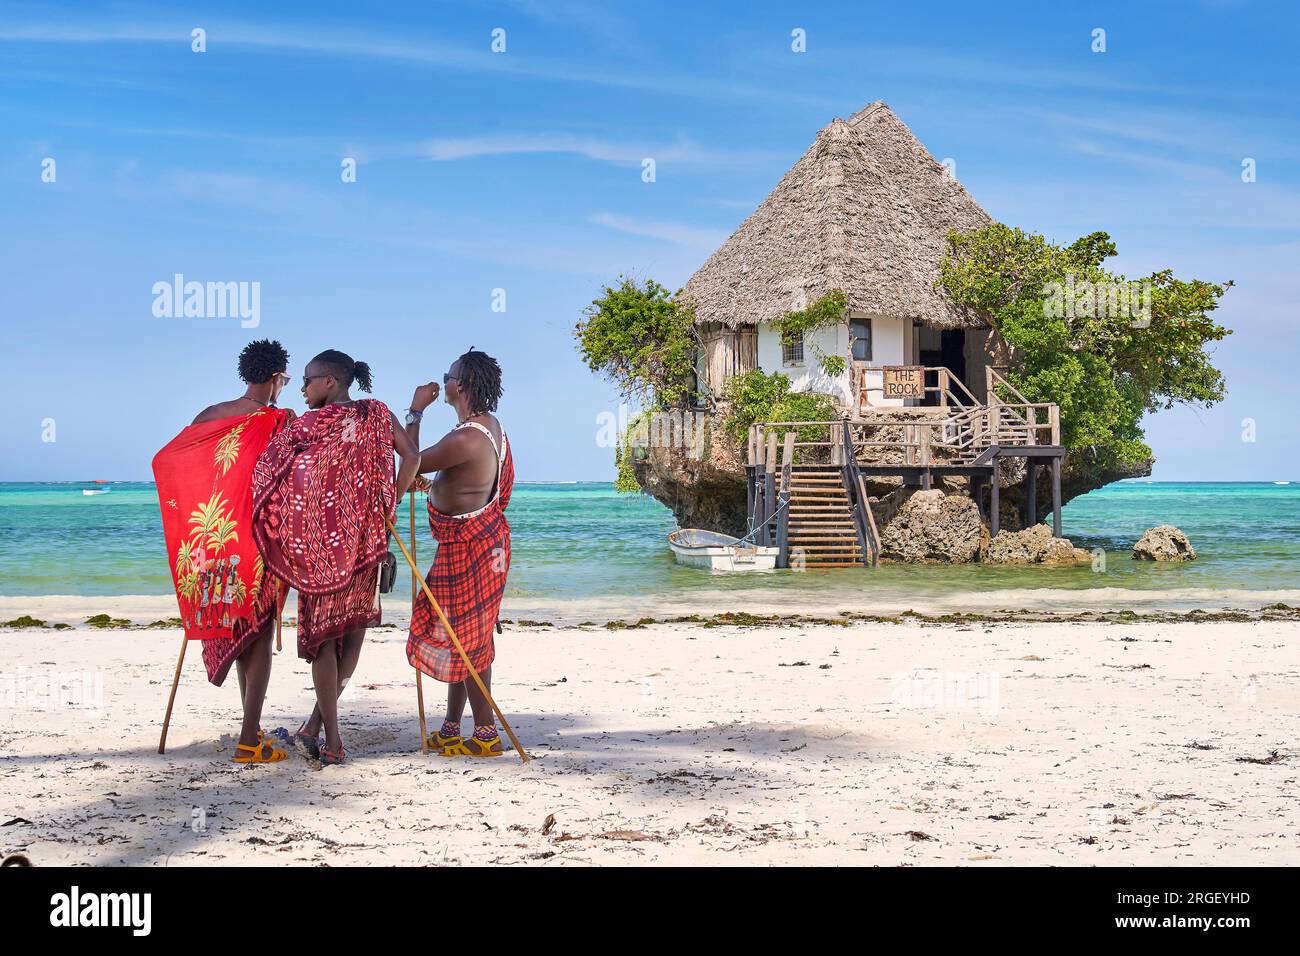 Masai men on the beach, the Rock Restaurant in the background, Pingwe, Zanzibar, Tanzania, East Africa Stock Photo